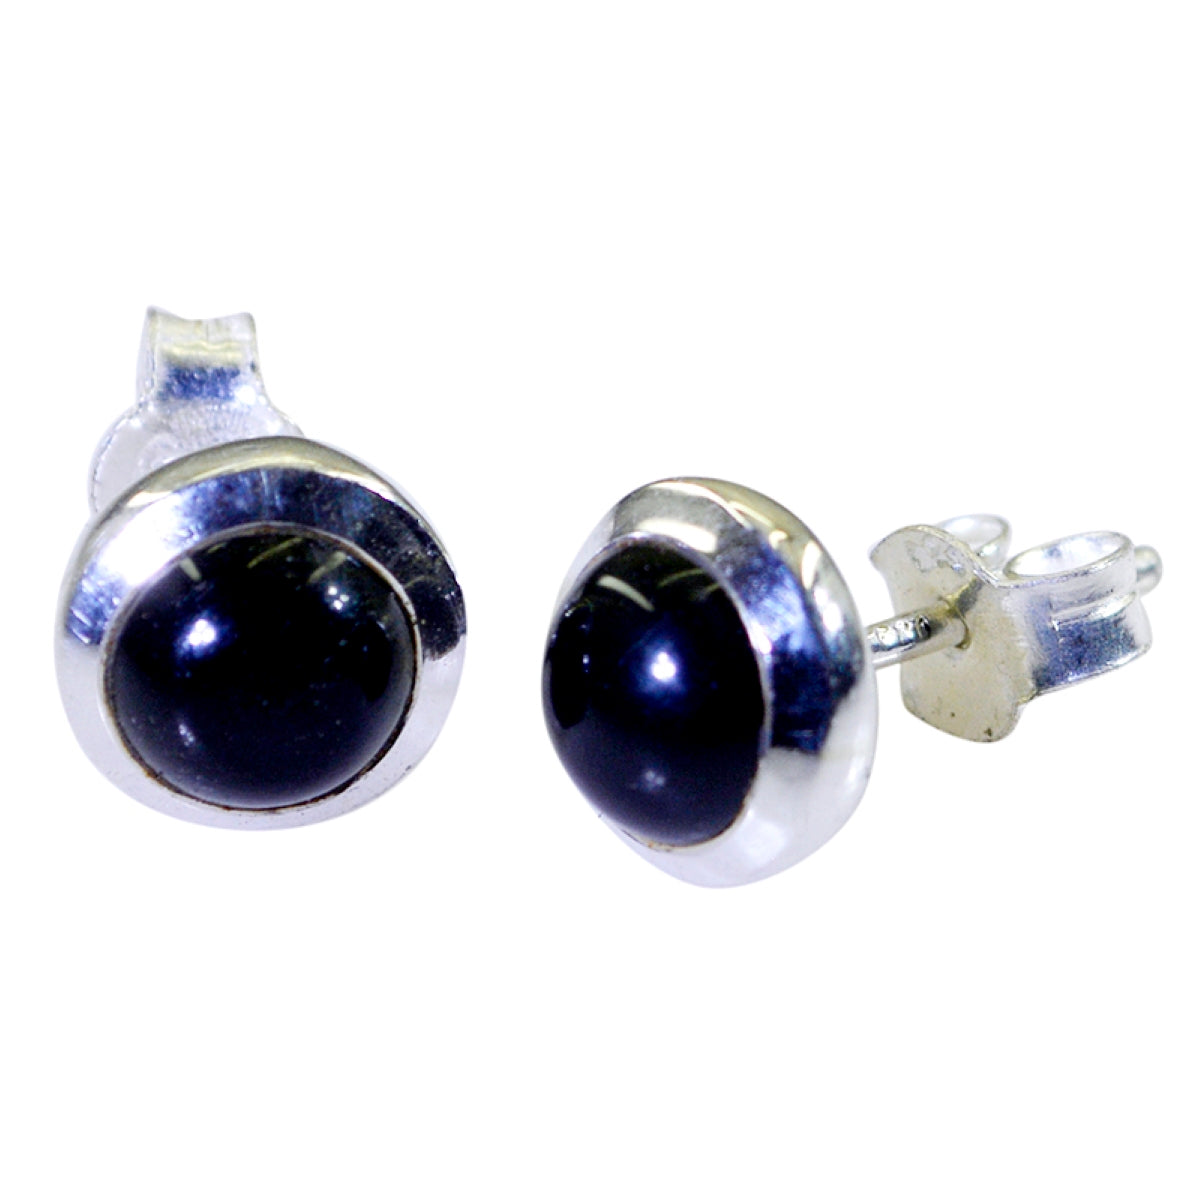 Riyo Good Gemstones round Cabochon Black Onyx Silver Earrings children day gift